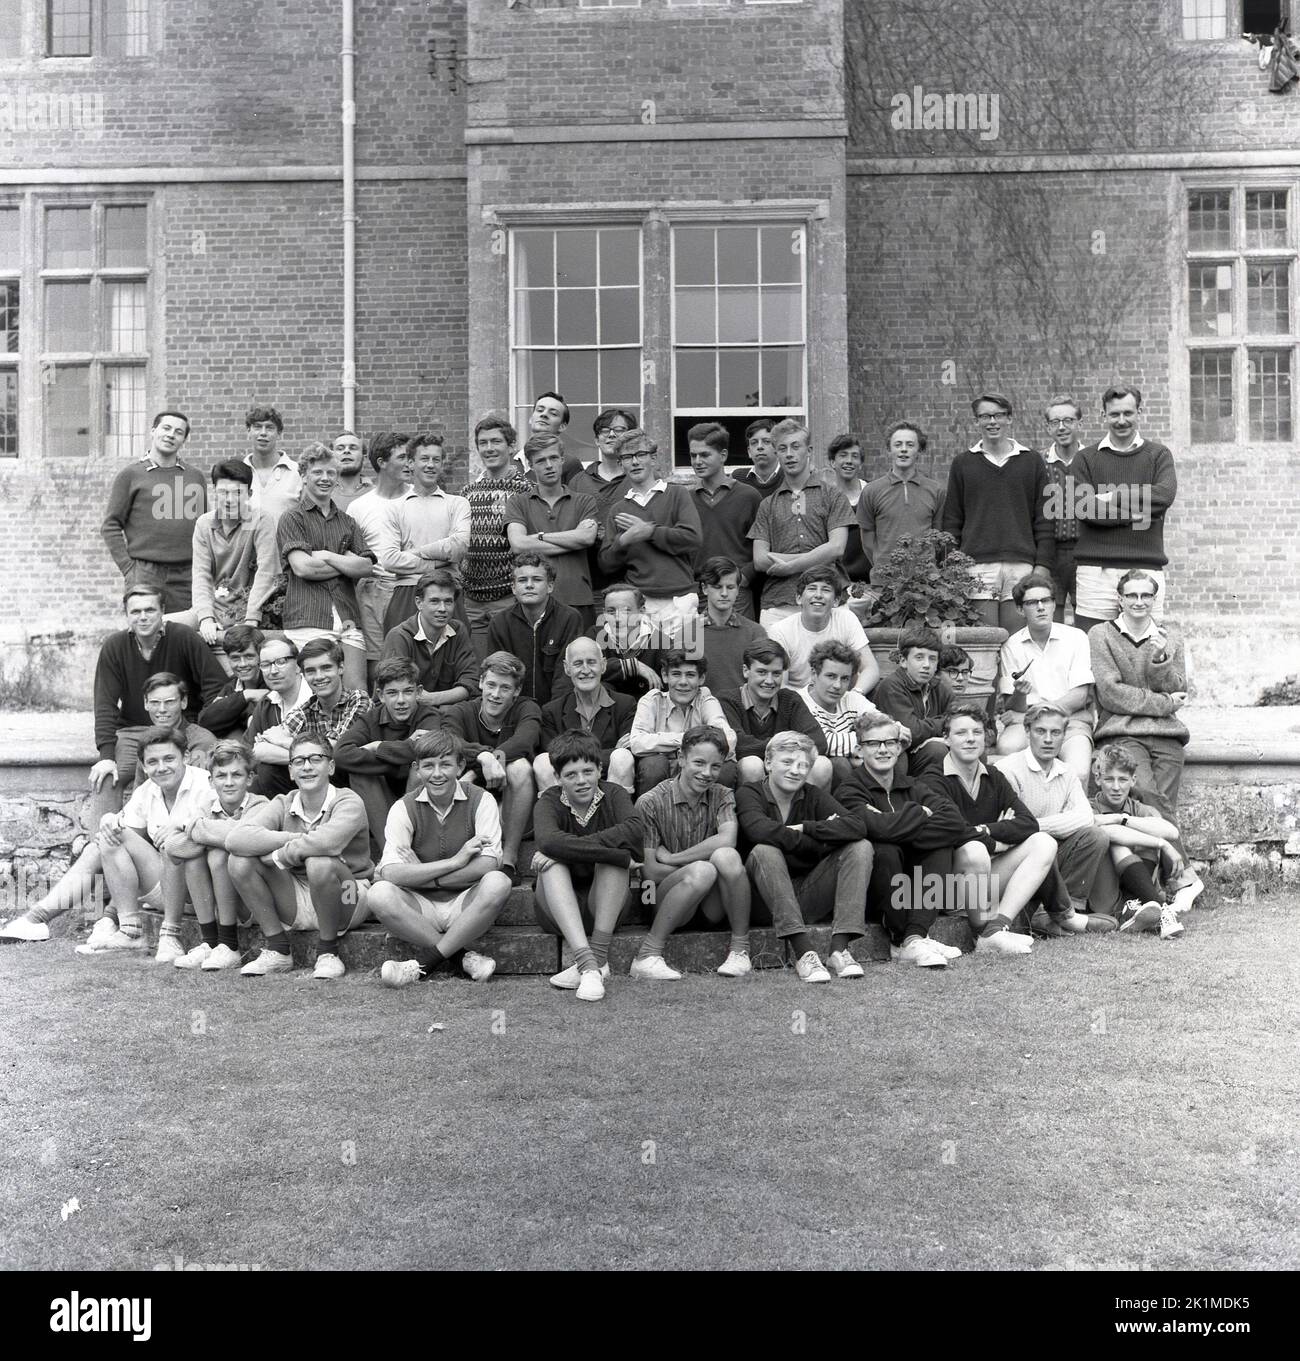 1964, historical ashford school group photo, England, UK, teachers with boy pupils. Stock Photo